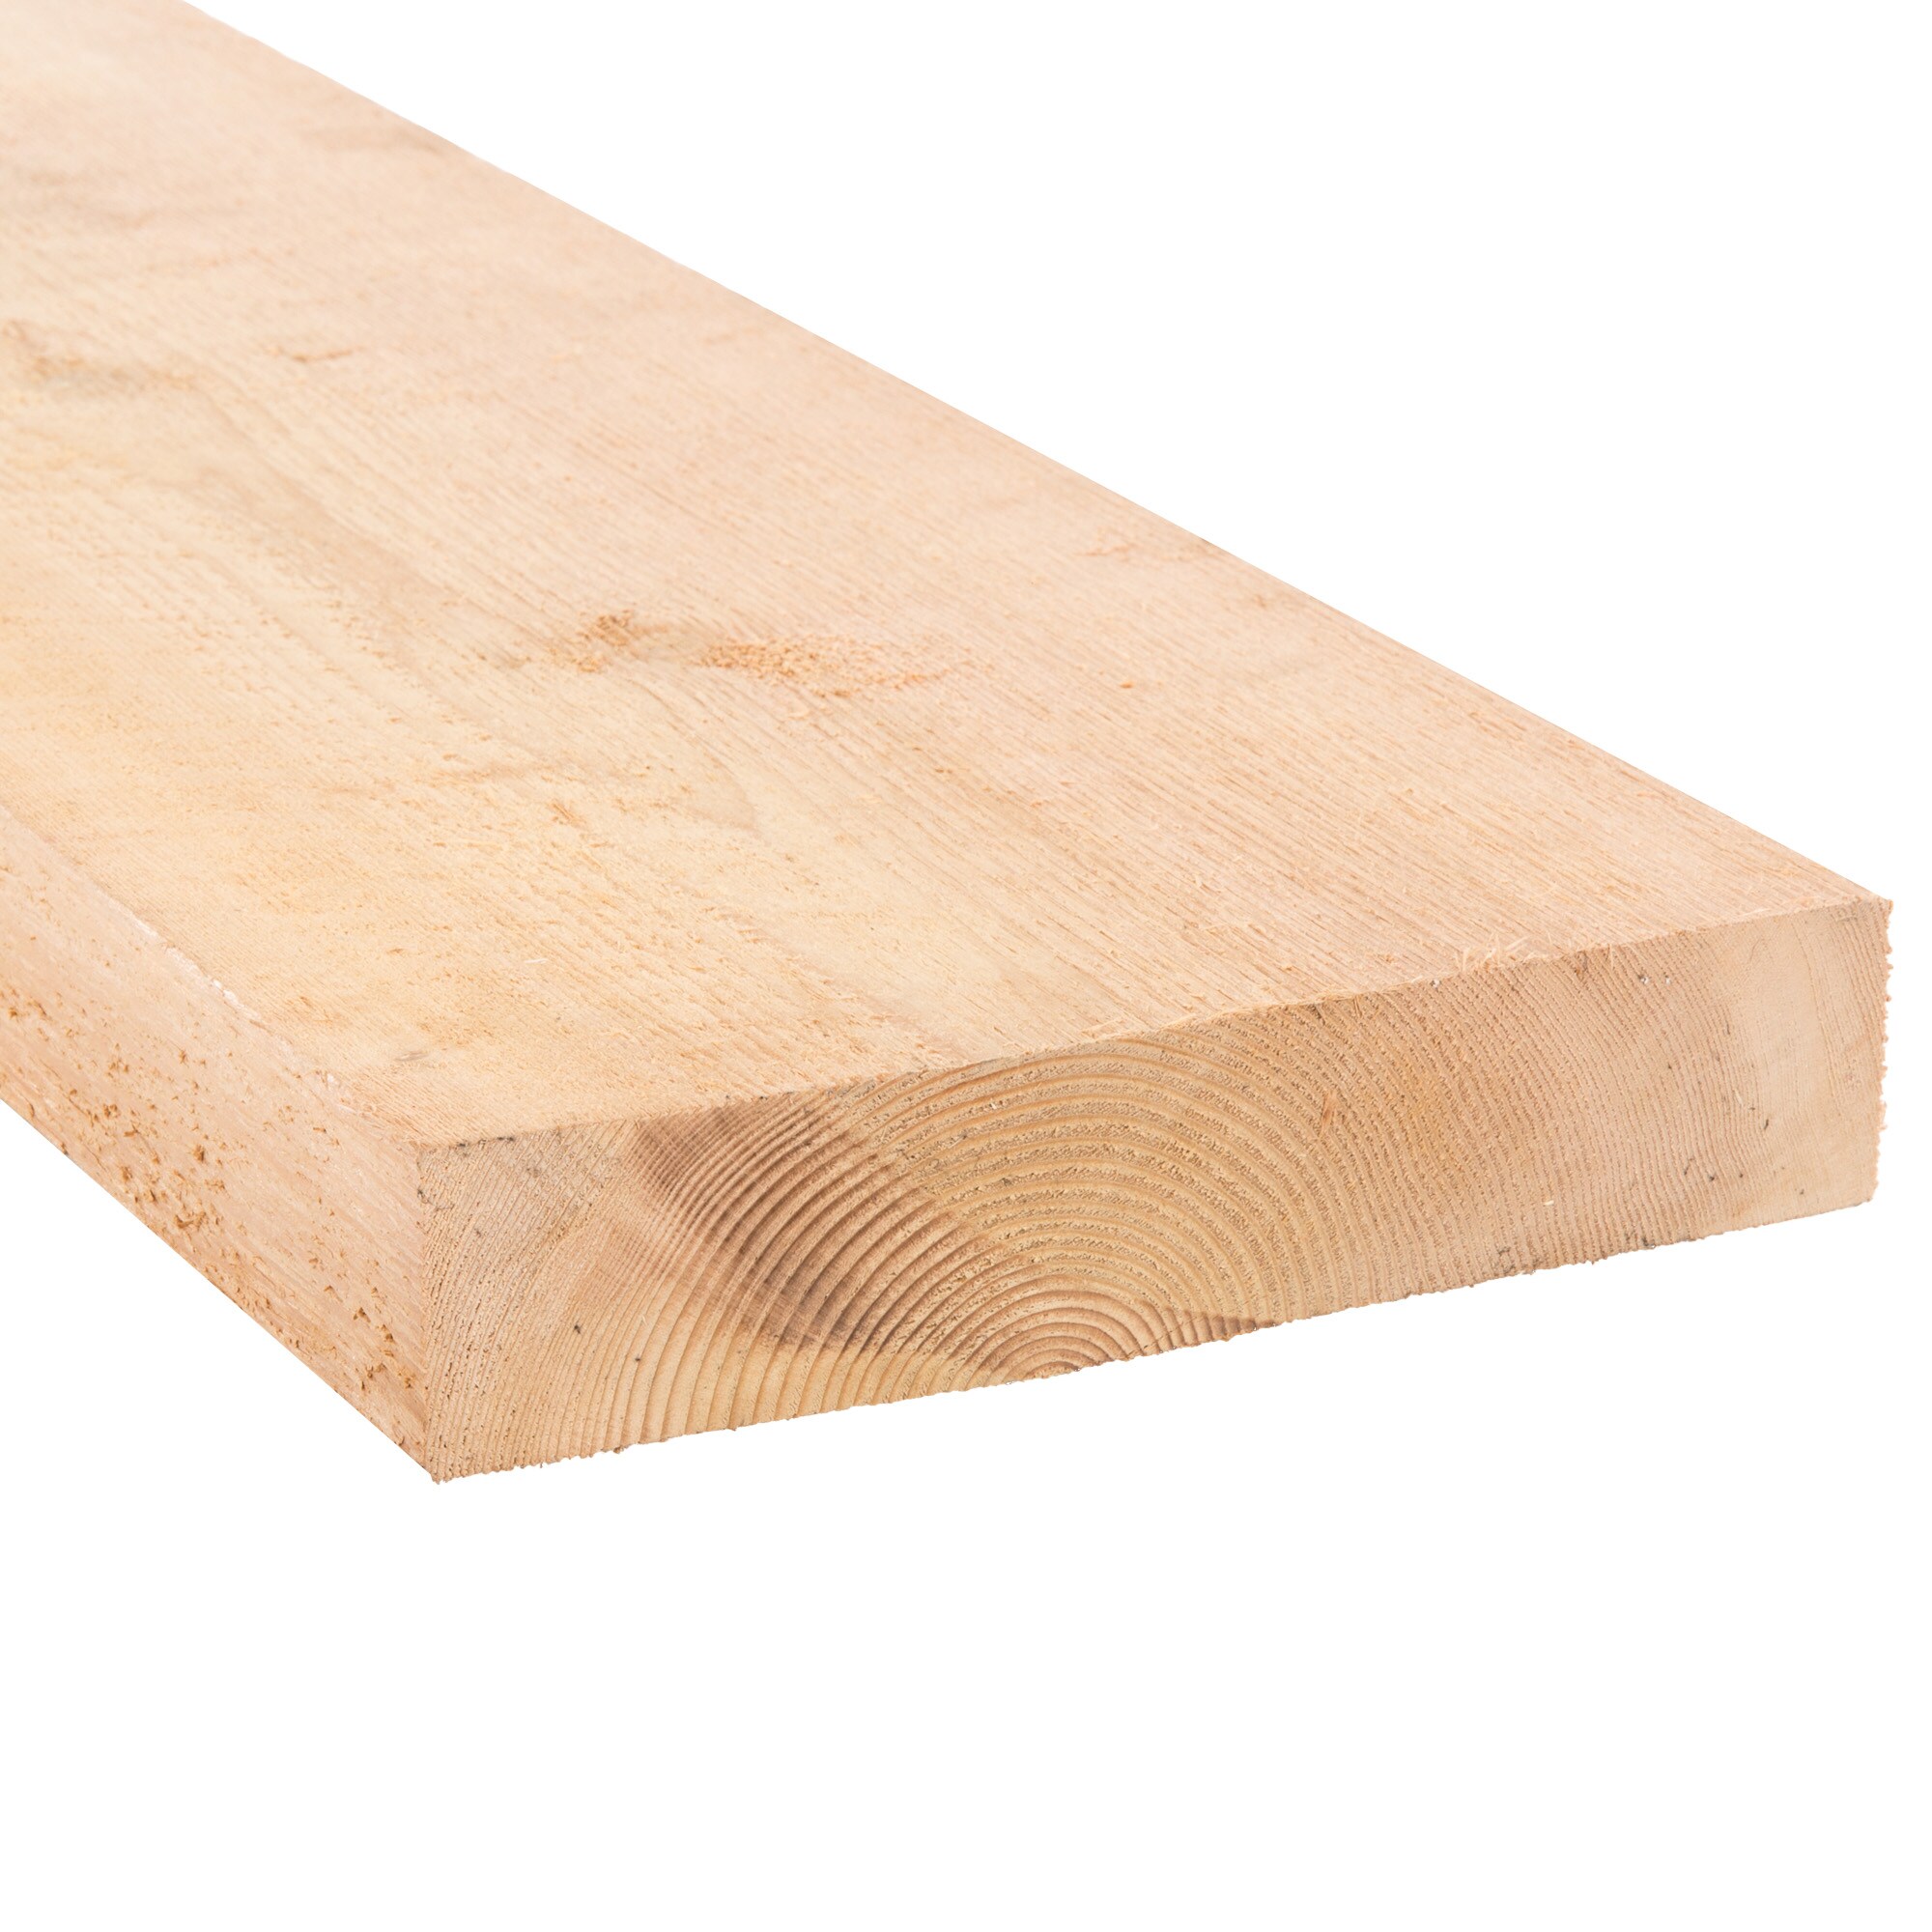 cedar wood lumber in dallas